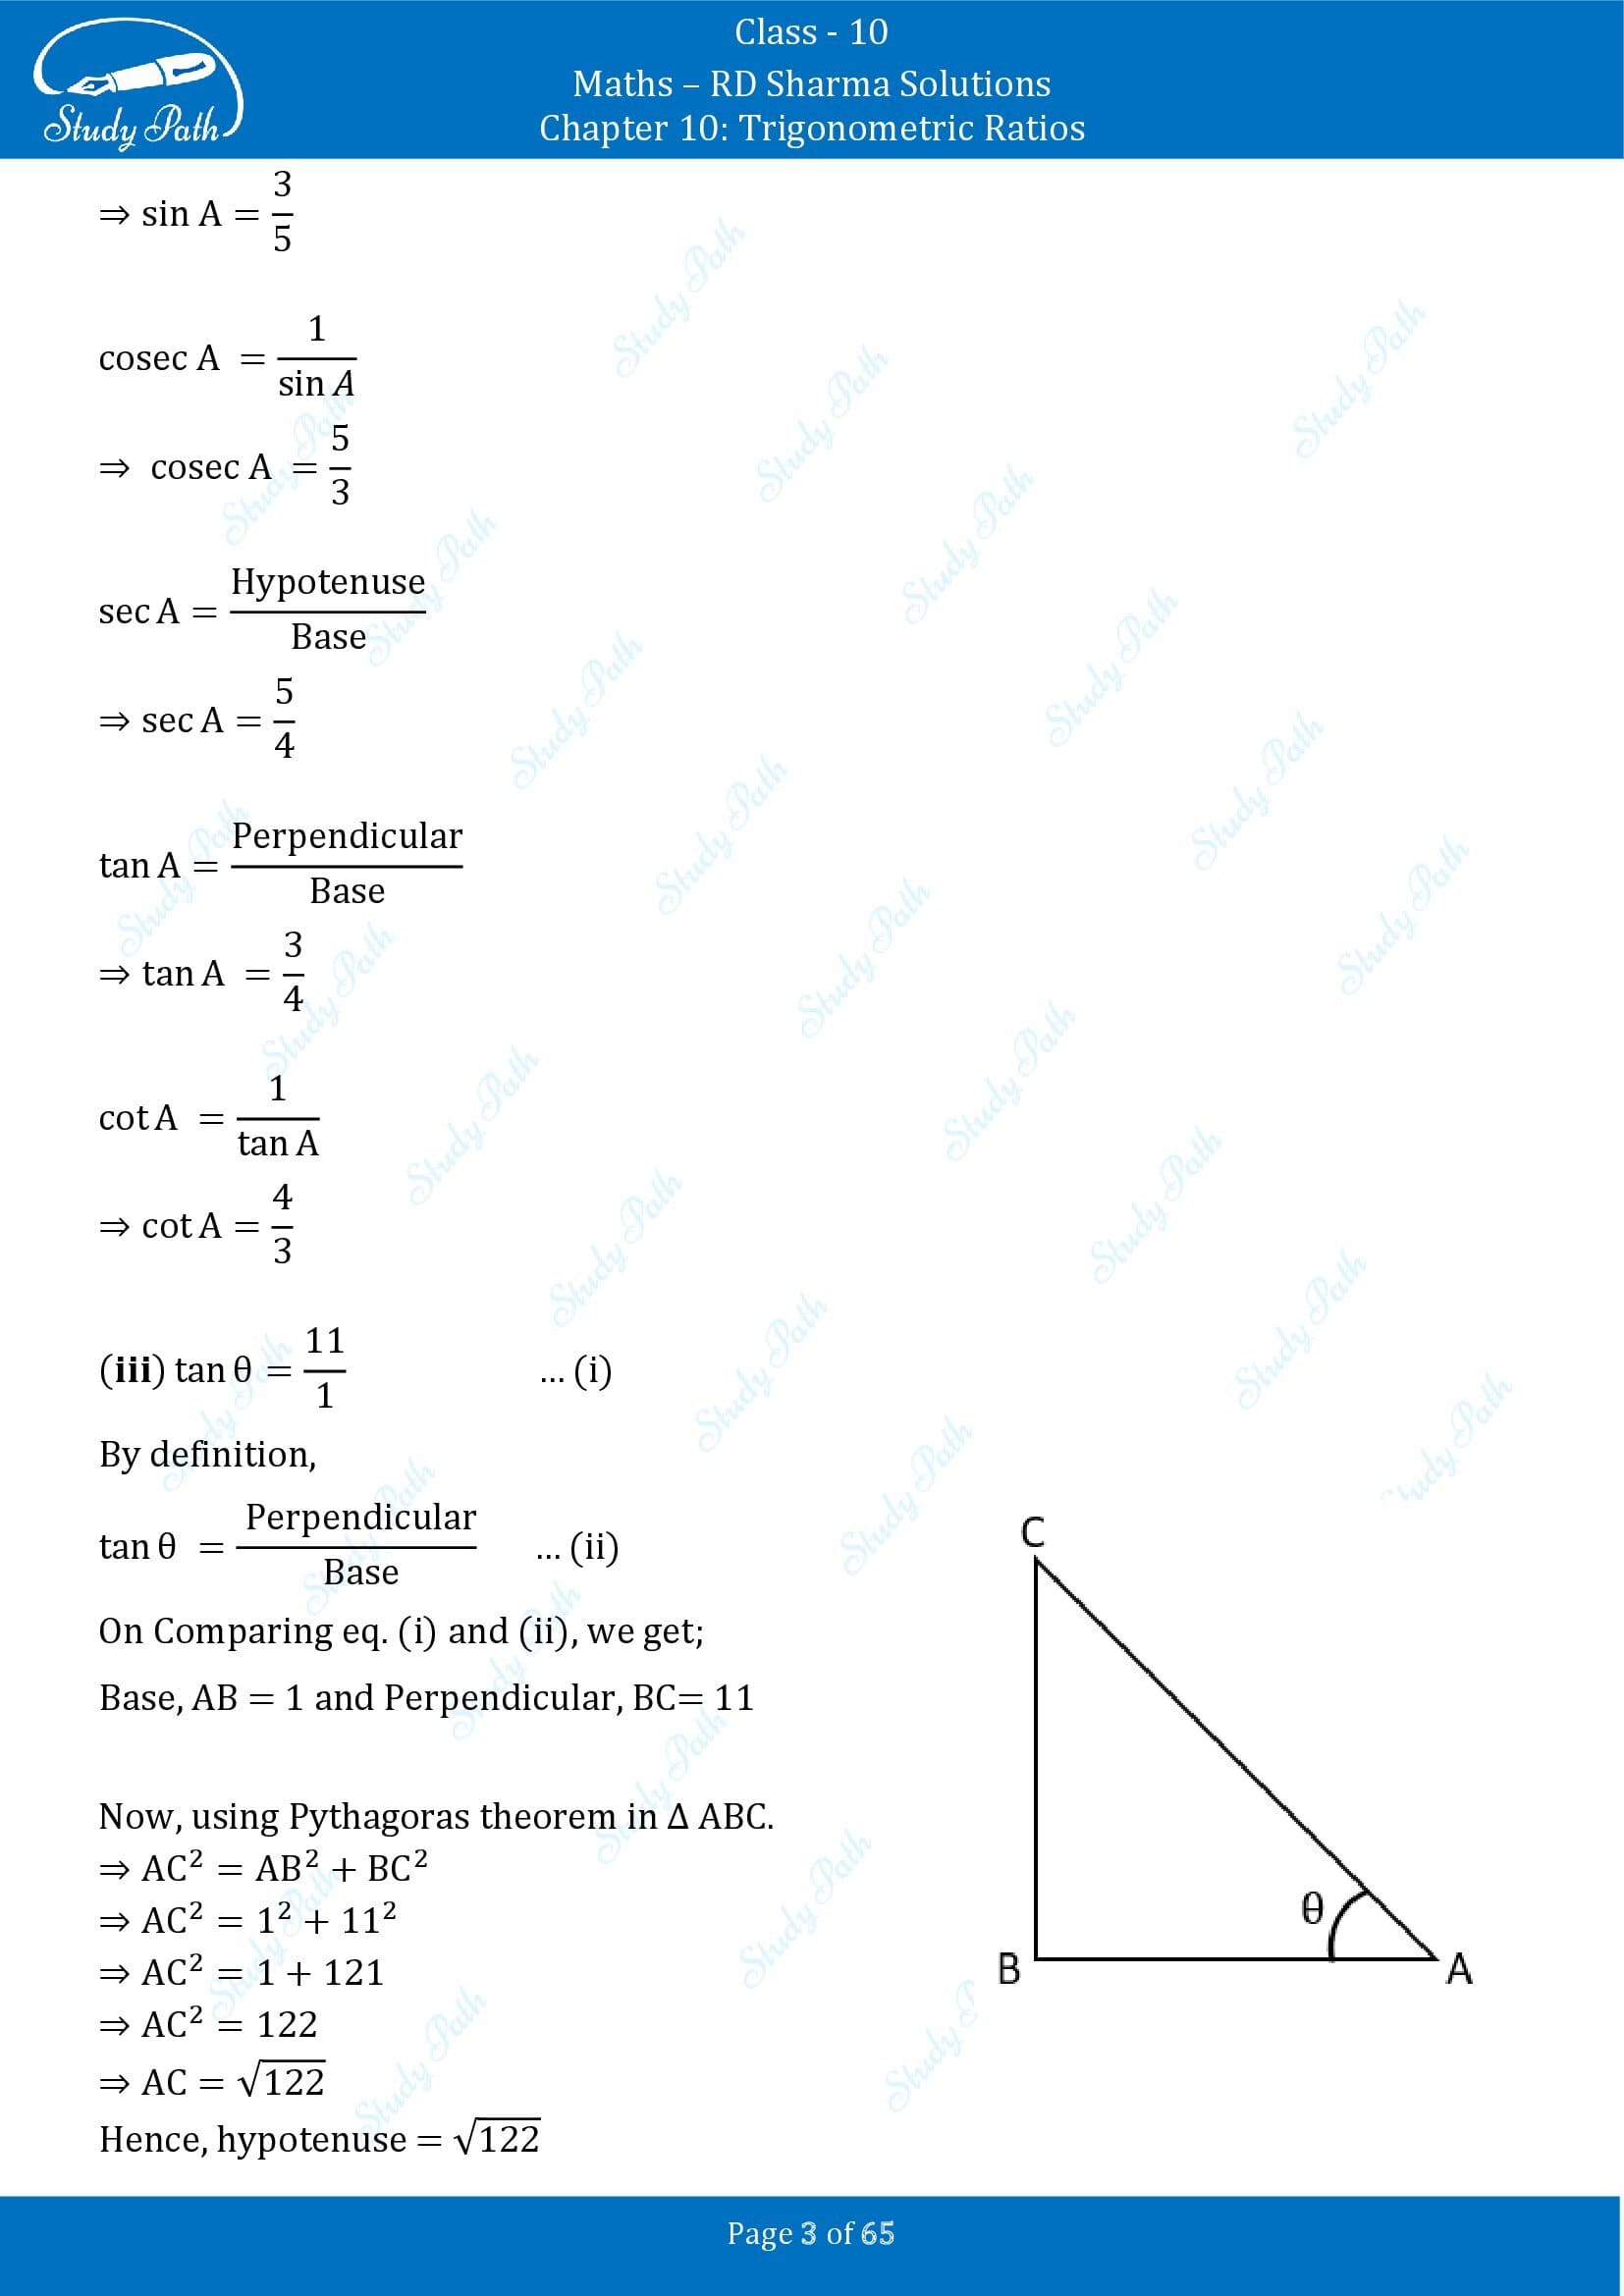 RD Sharma Solutions Class 10 Chapter 10 Trigonometric Ratios Exercise 10.1 00003